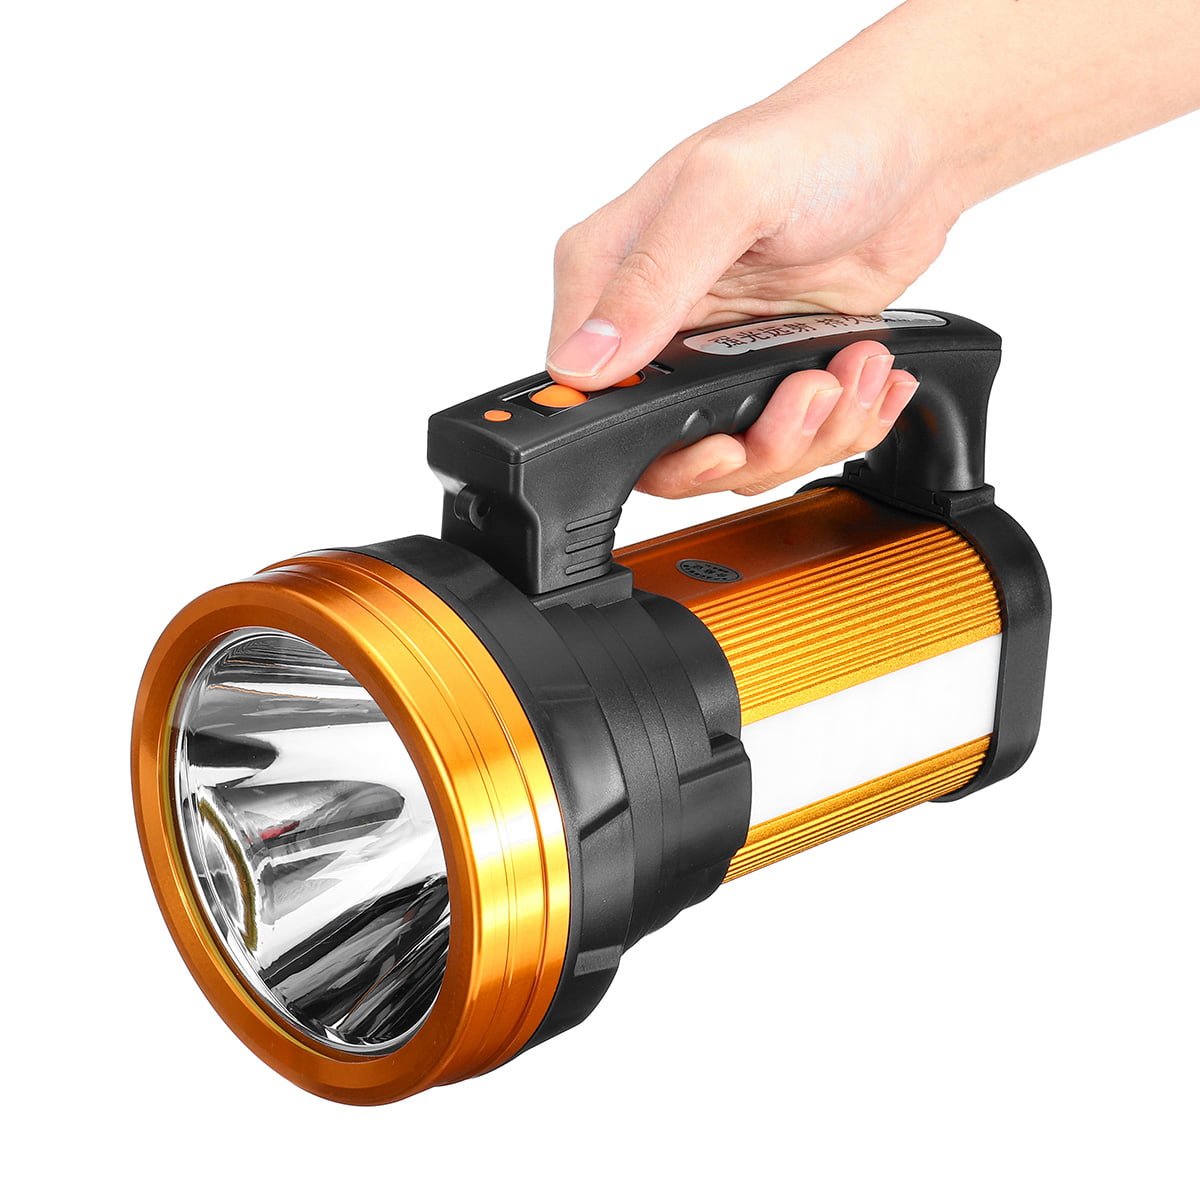 Rechargeable LED Flashlight Handheld t6 Spotlight USB Torch Lamp Light